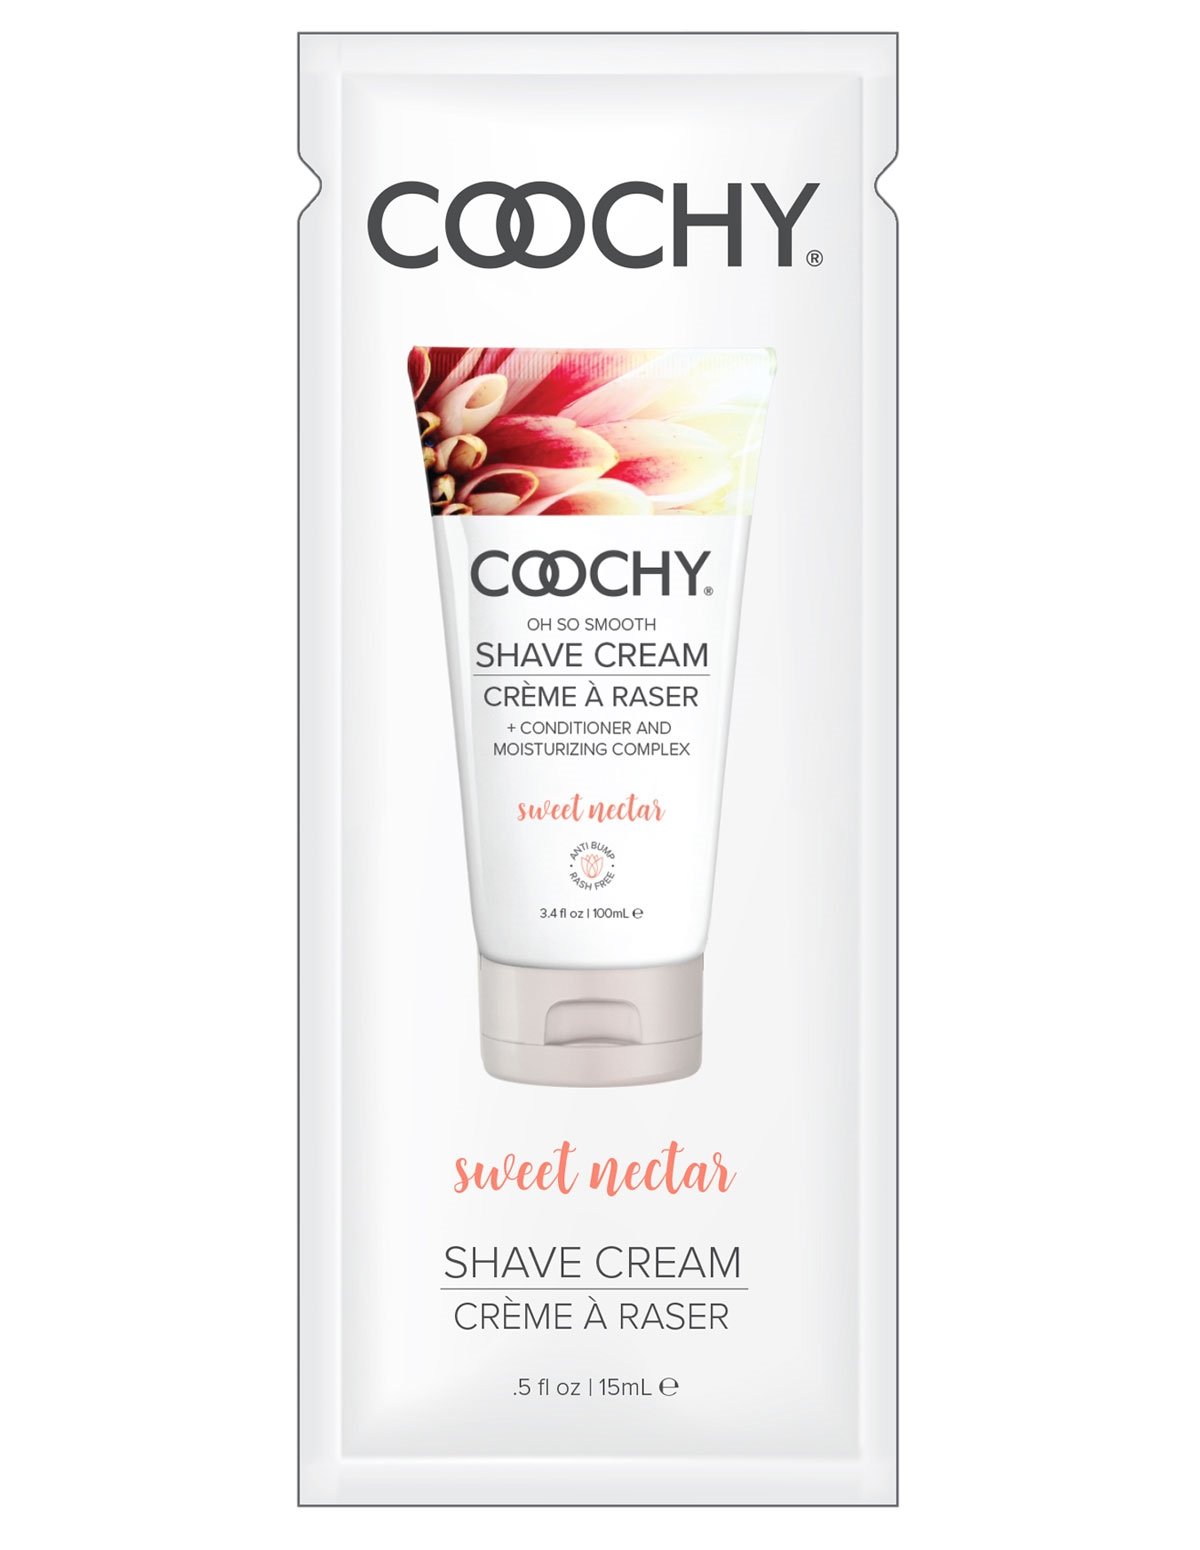 alternate image for Coochy Cream Foil Packet - Sweet Nectar